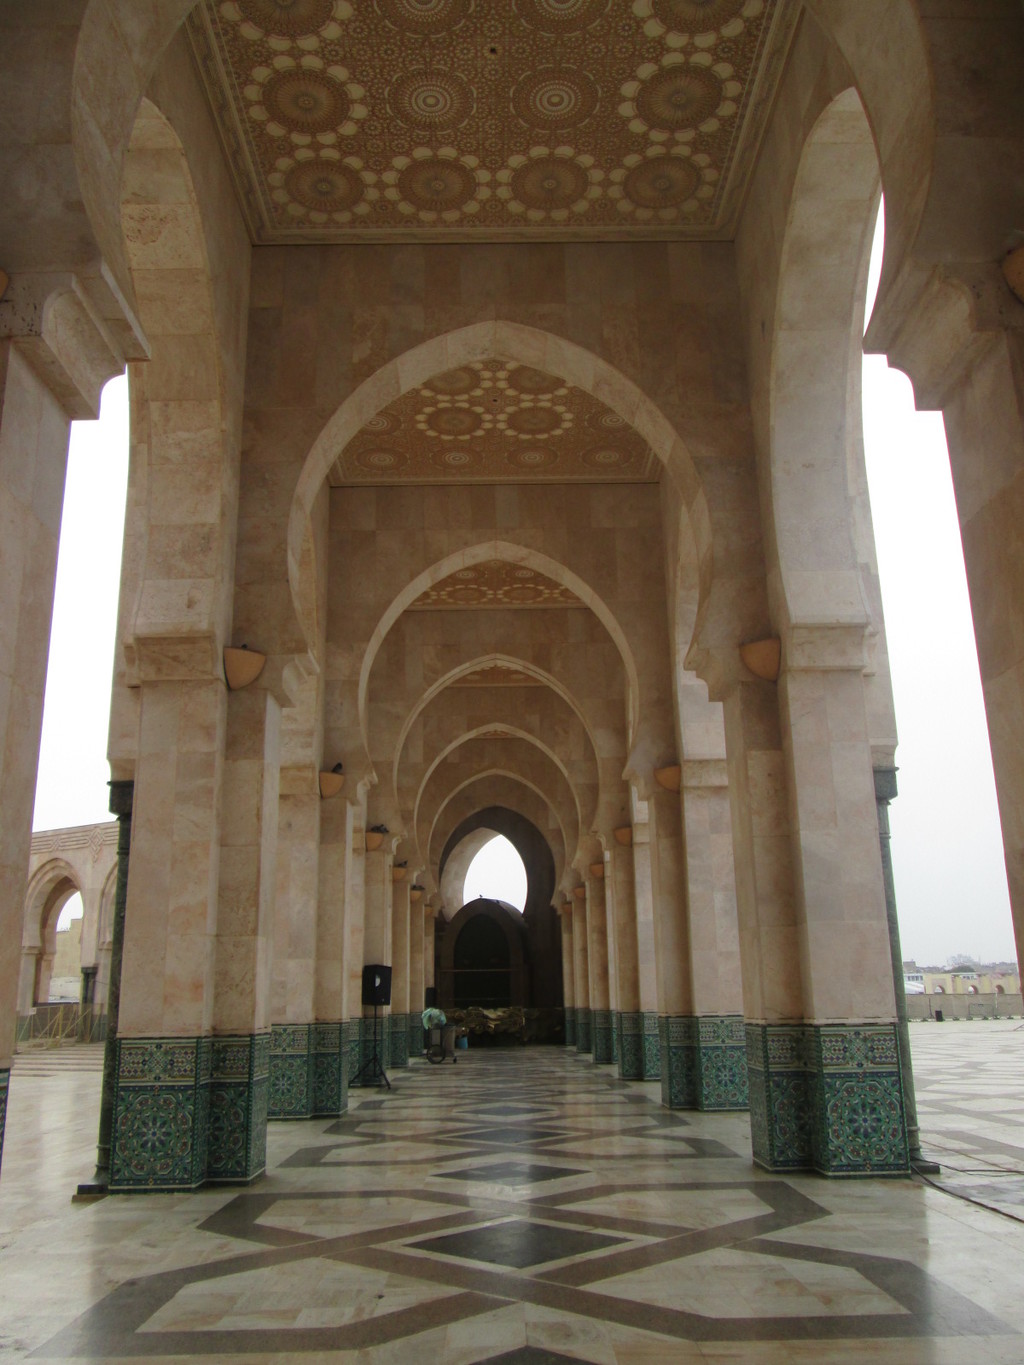 la-mezquita-mas-hermosa-haya-visto-b7f1f